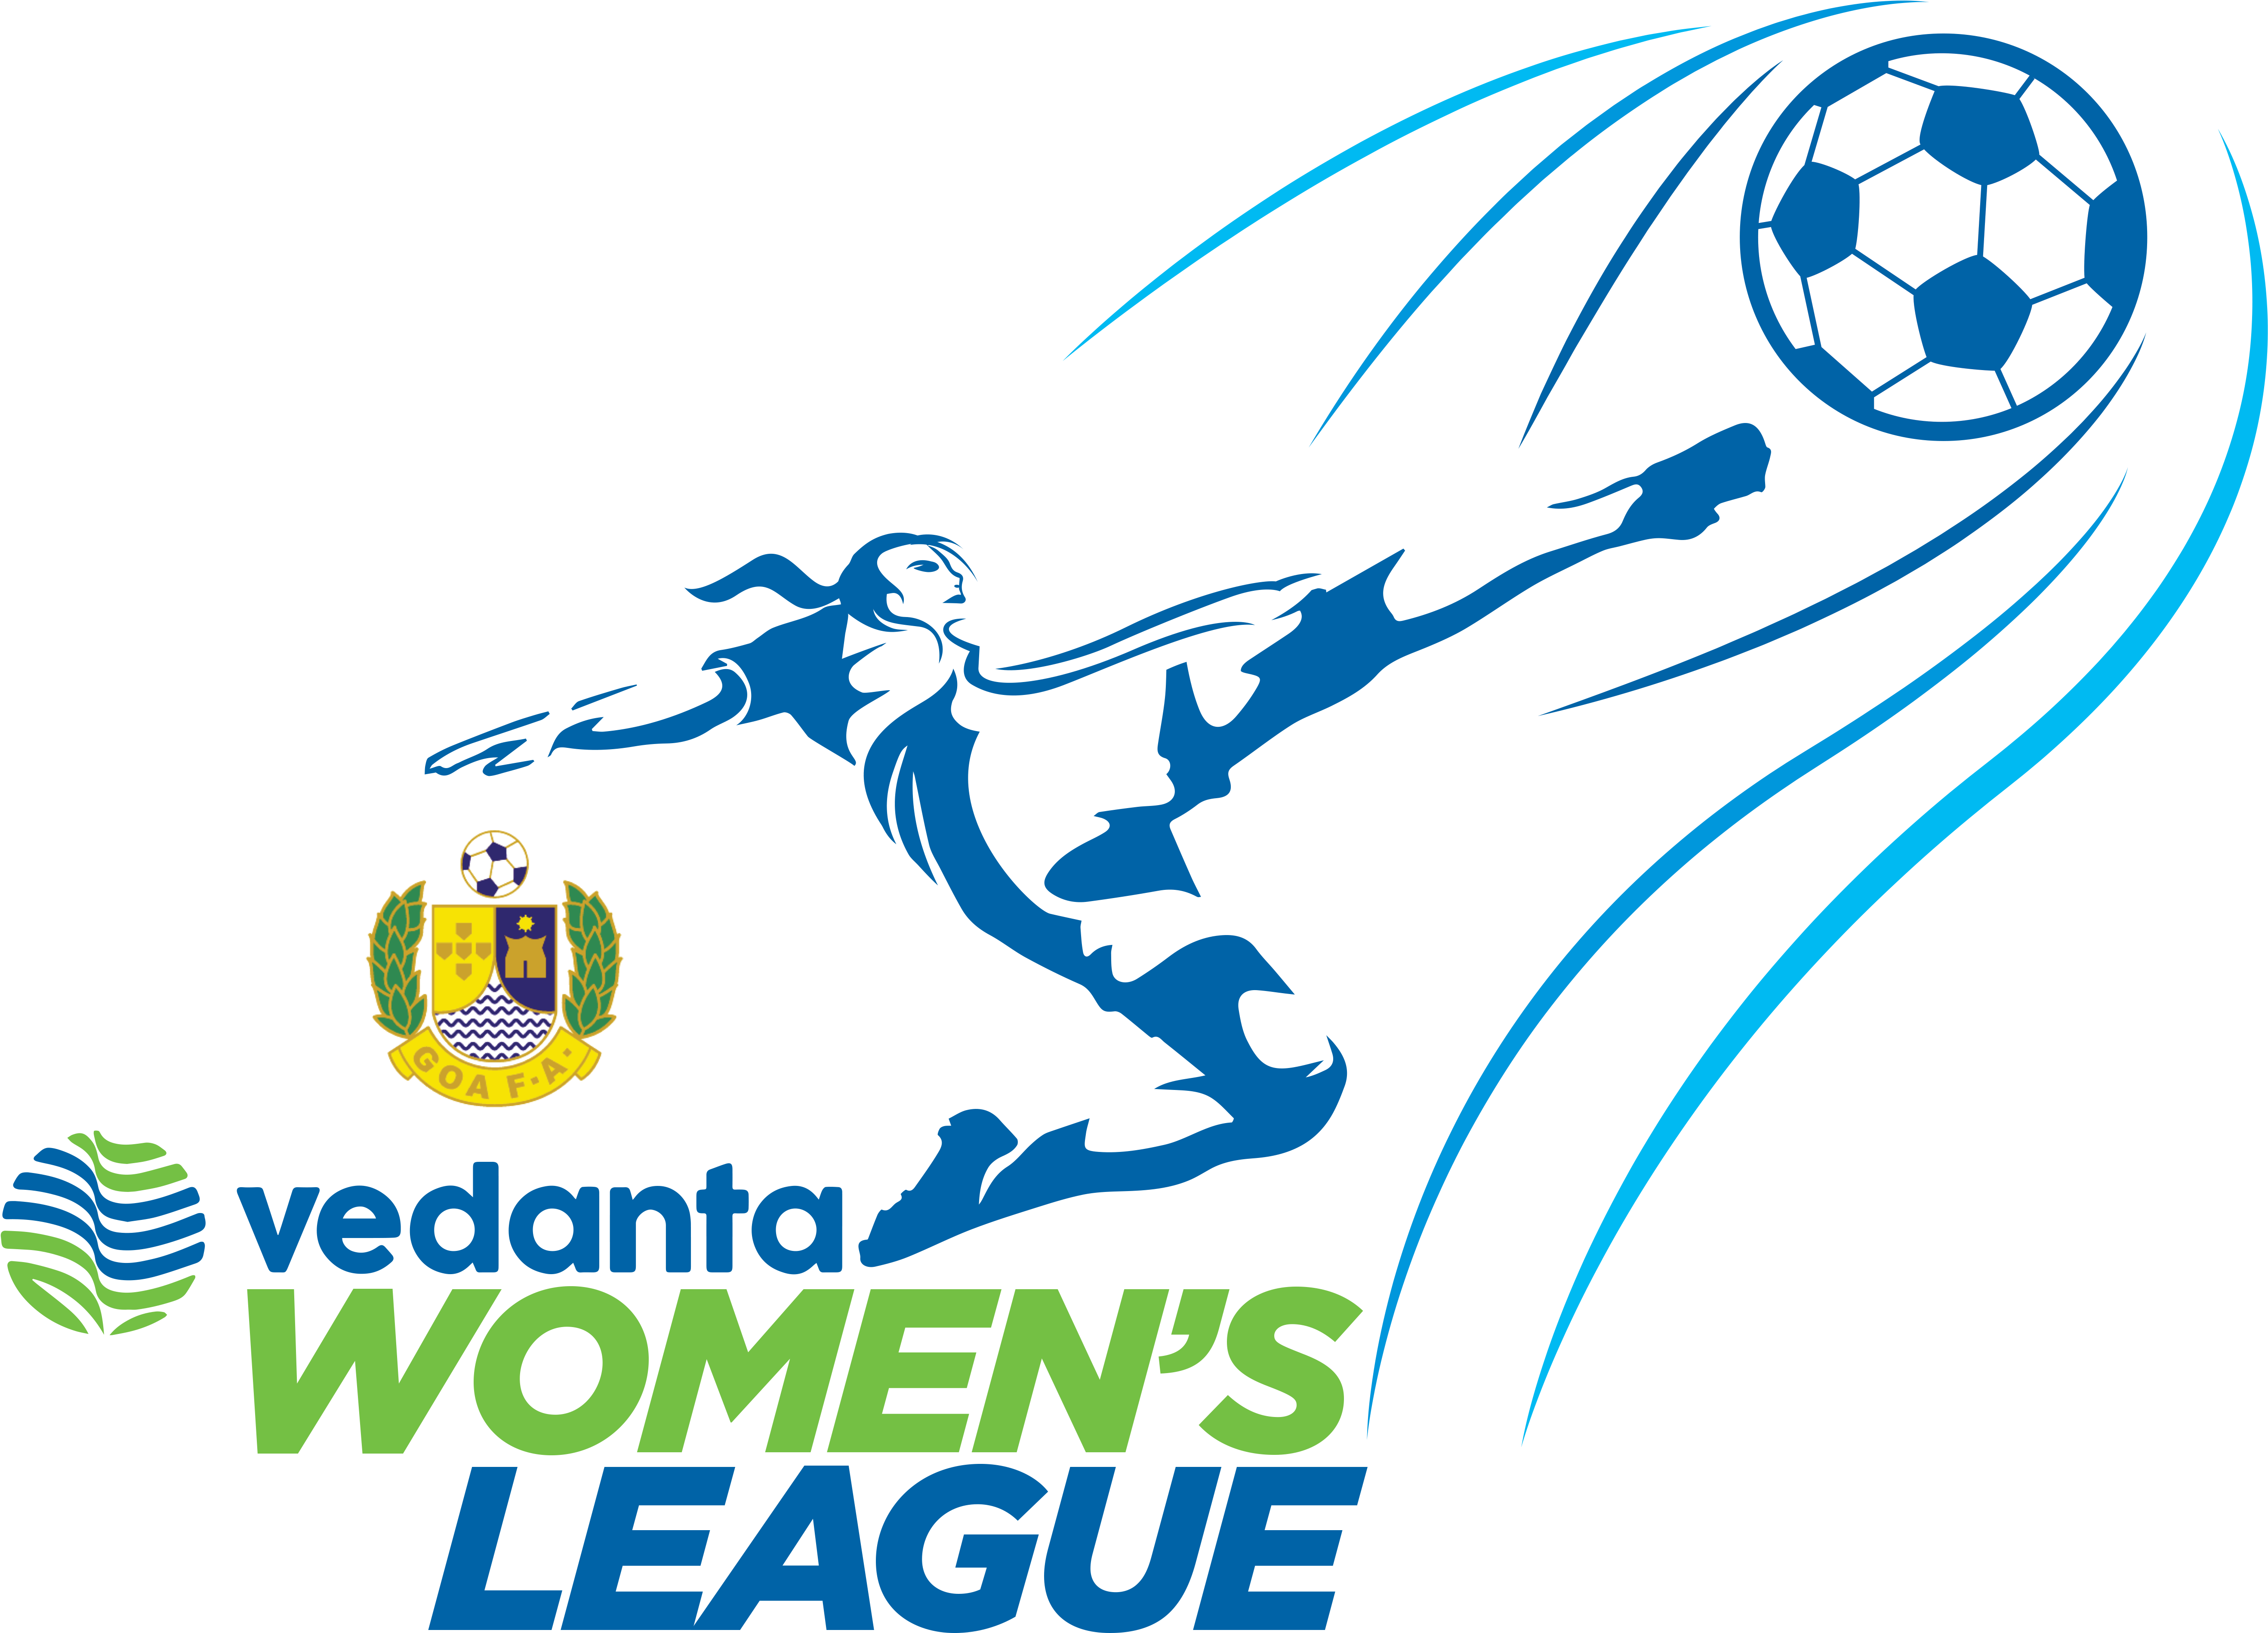 Women's Football League Logo (5272x4068)